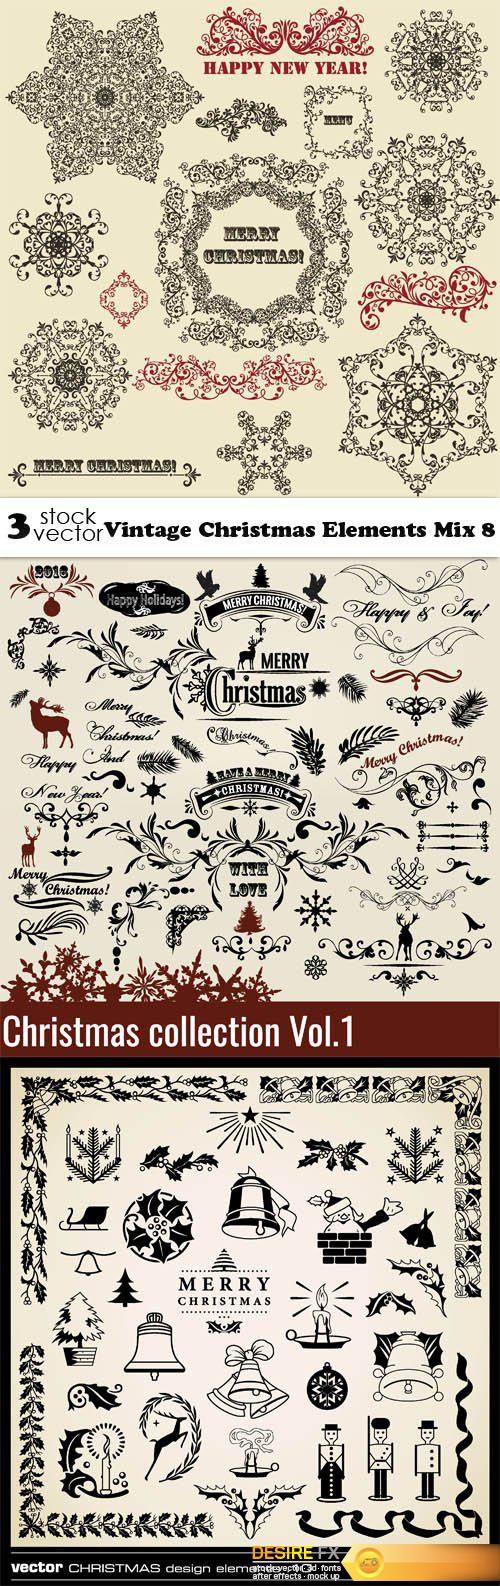 Vectors - Vintage Christmas Elements Mix 8